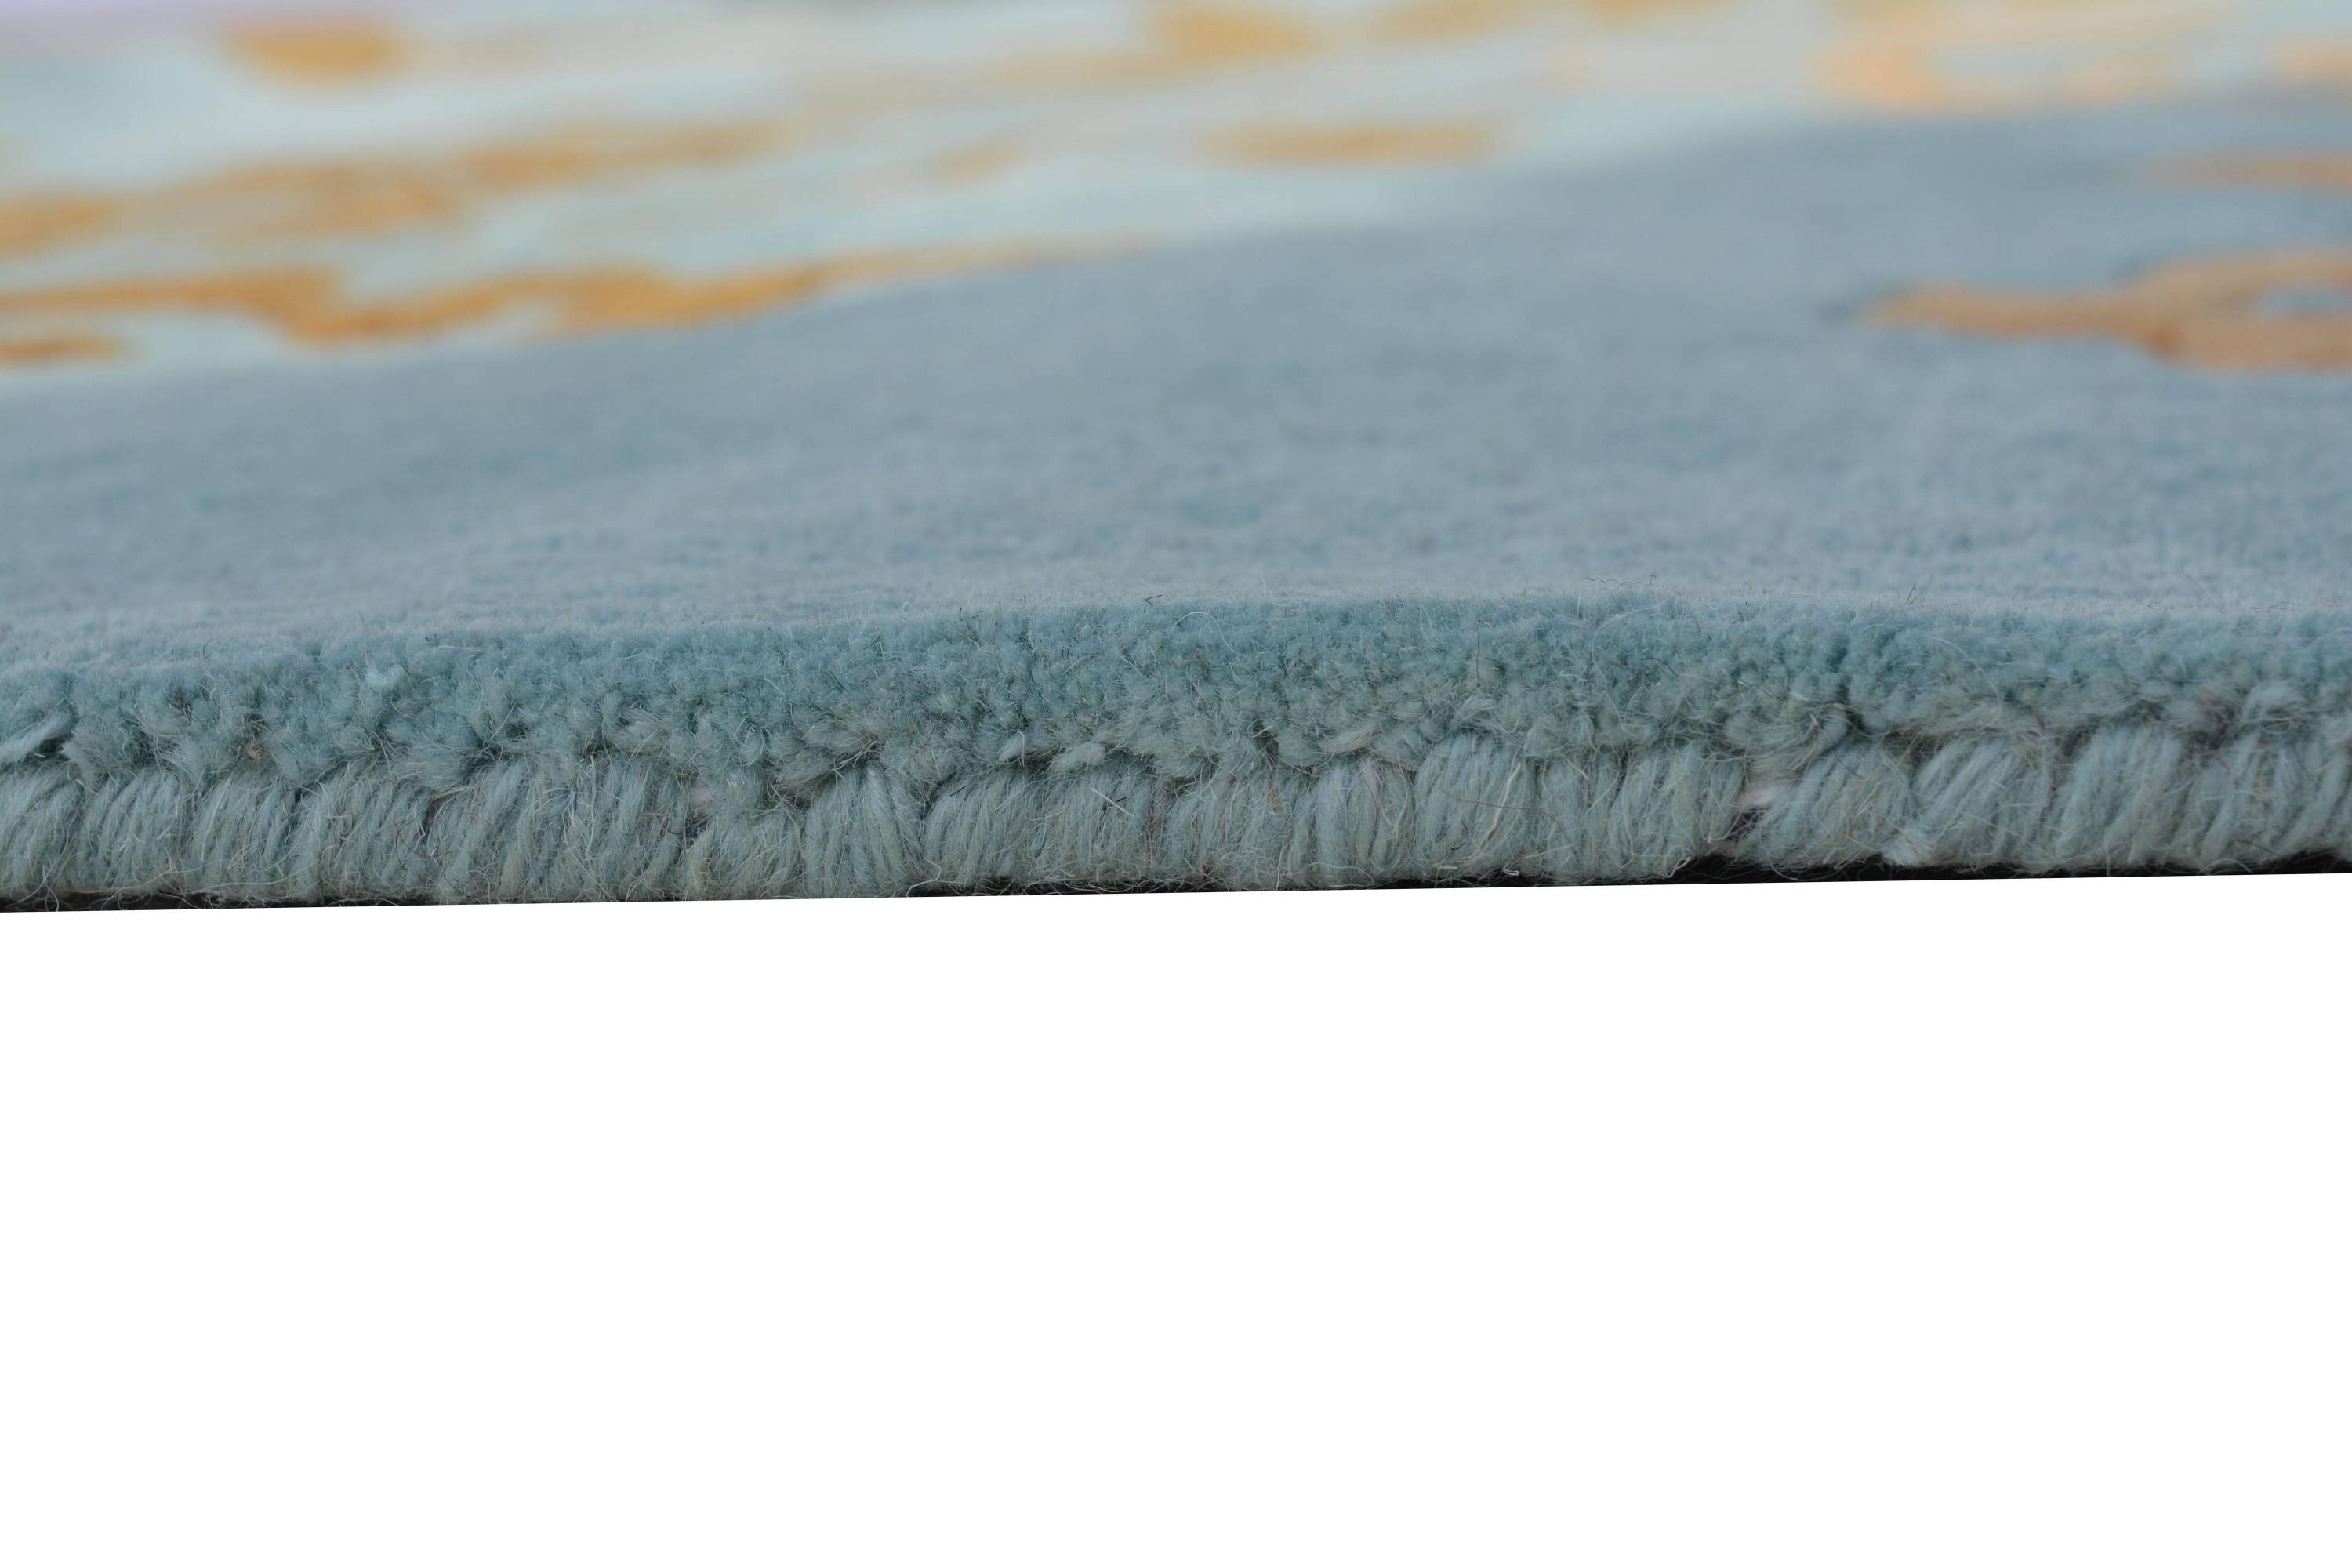 Detec™ Presto Modern Design Floral Hand Tufted Wool Carpet